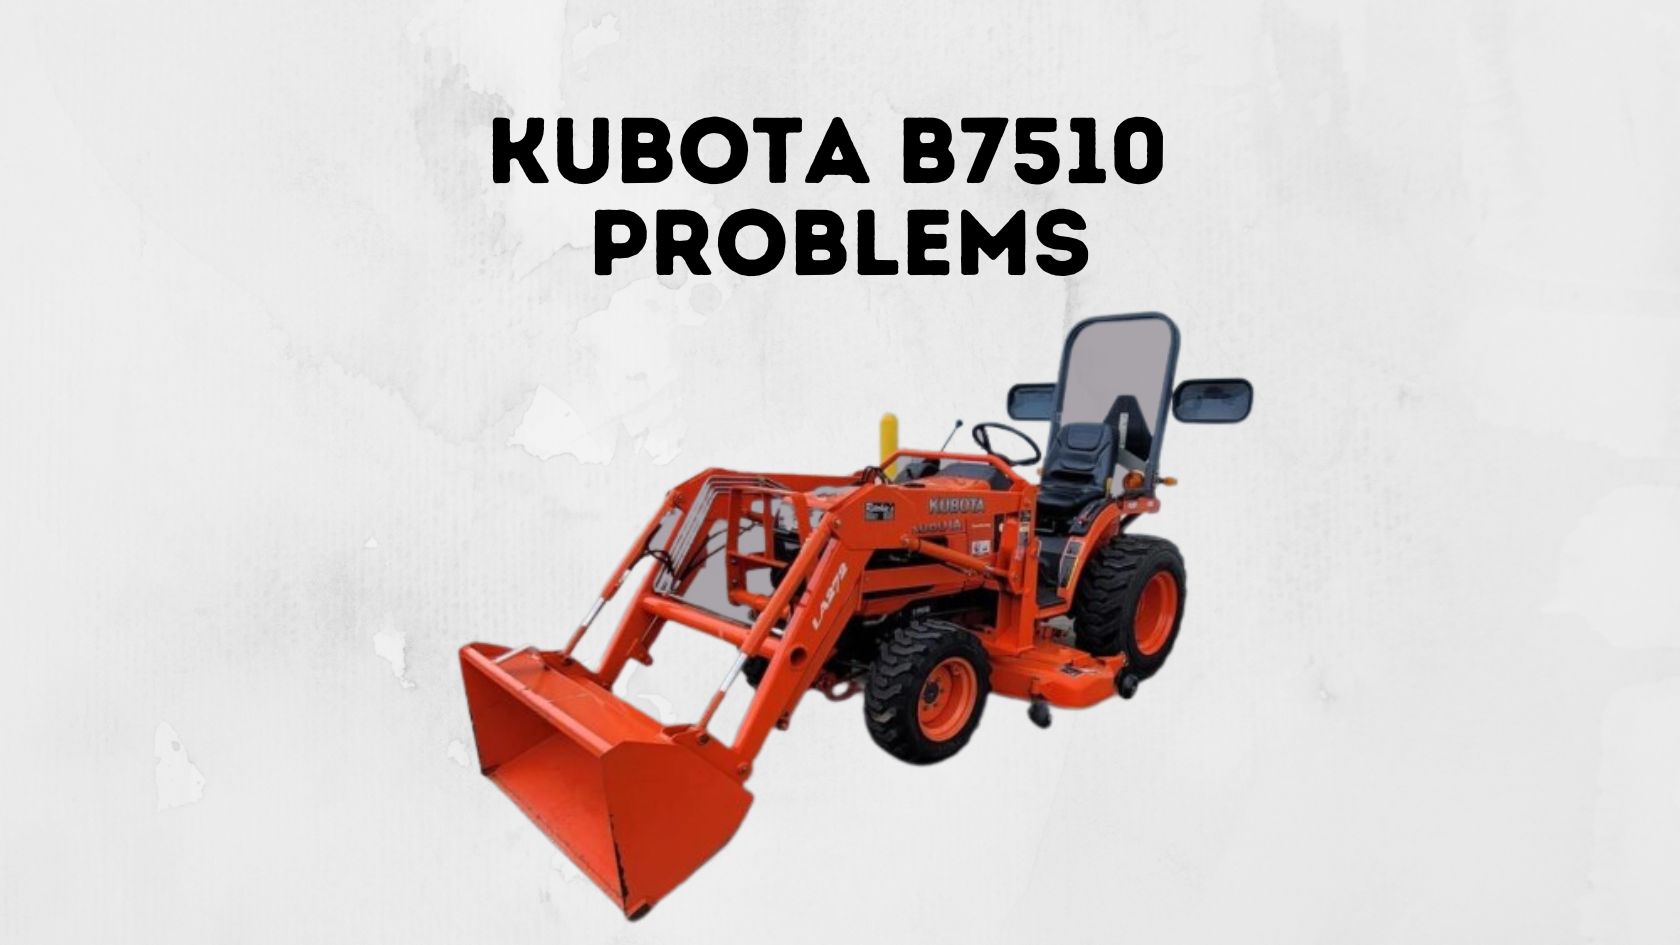 Kubota B7510 Problems